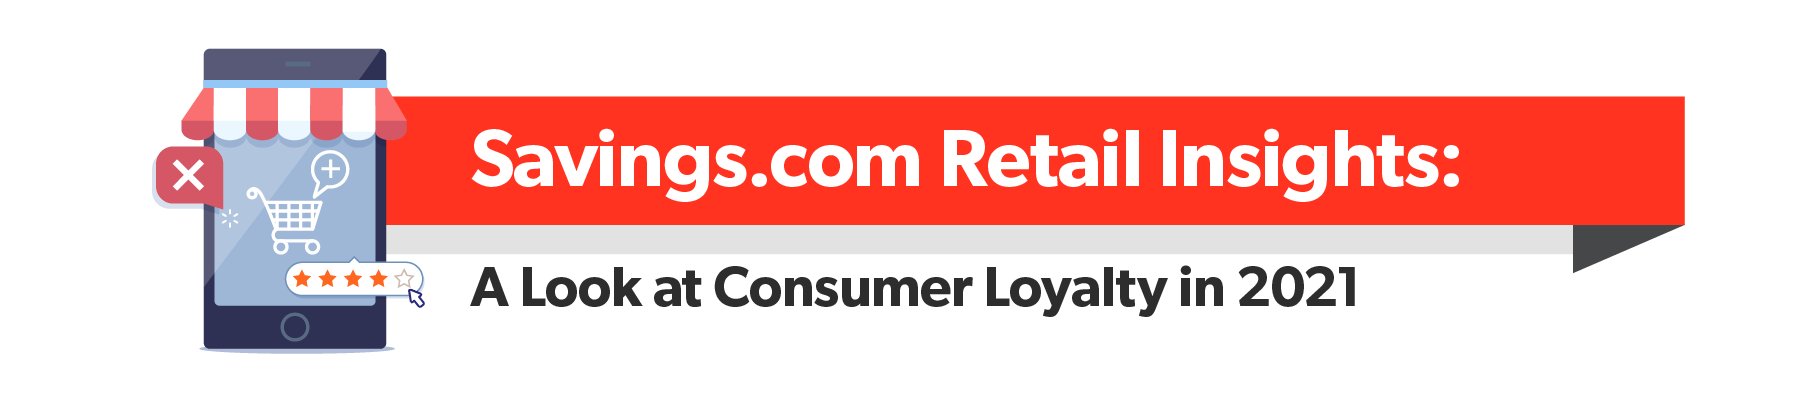 Savings.com Retail Insights: A Look at Consumer Loyalty in 2021